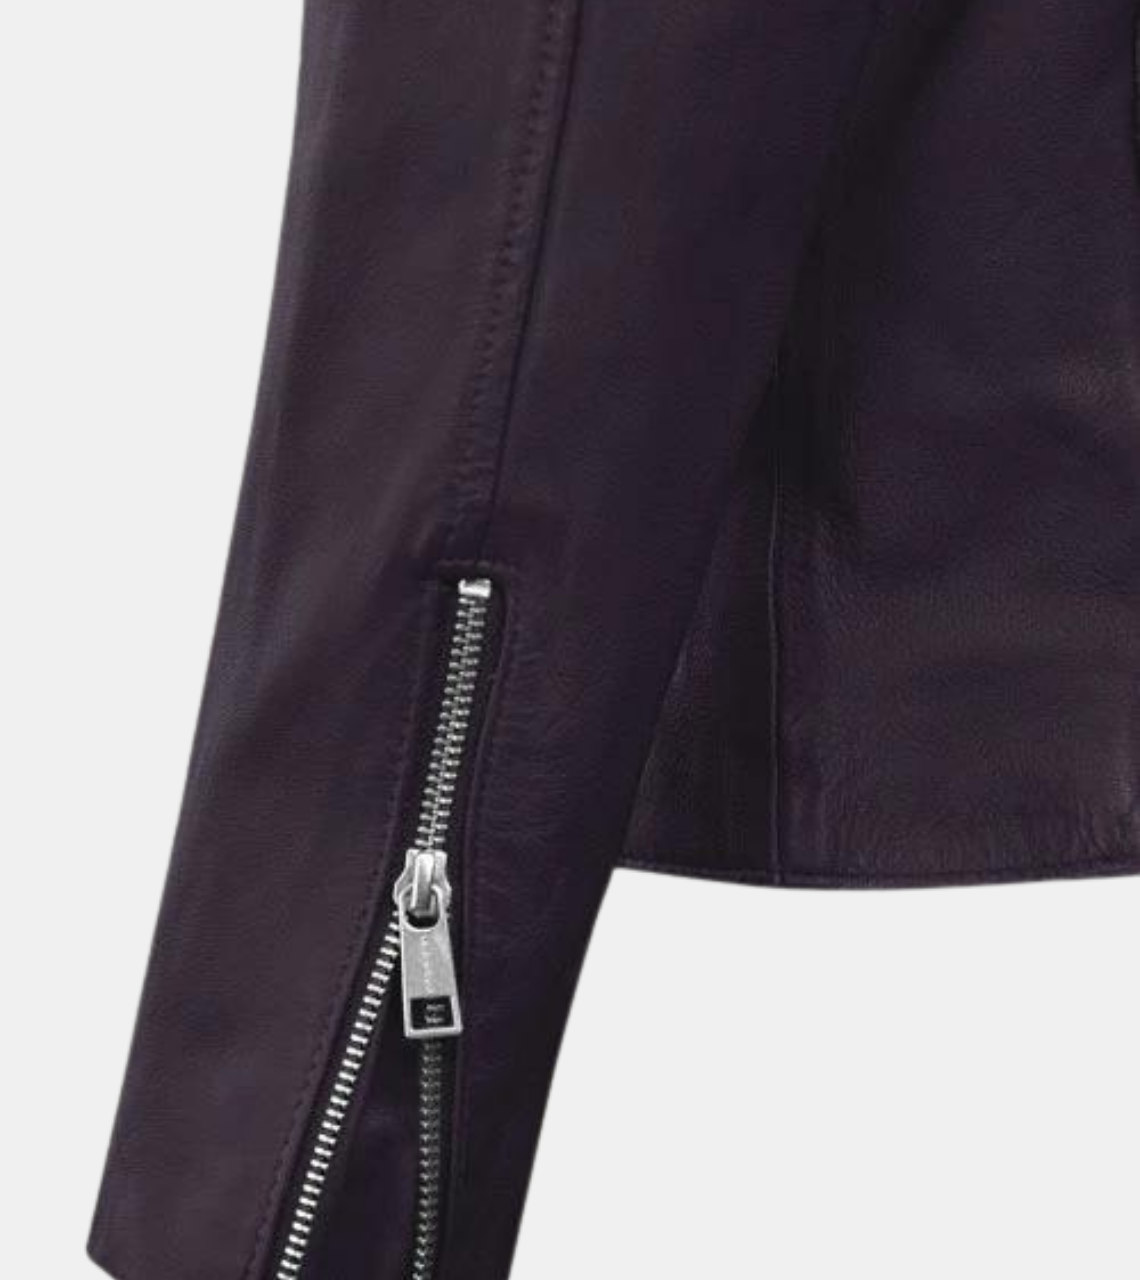 Gespare Men's Violet Biker's Leather Jacket Cuff